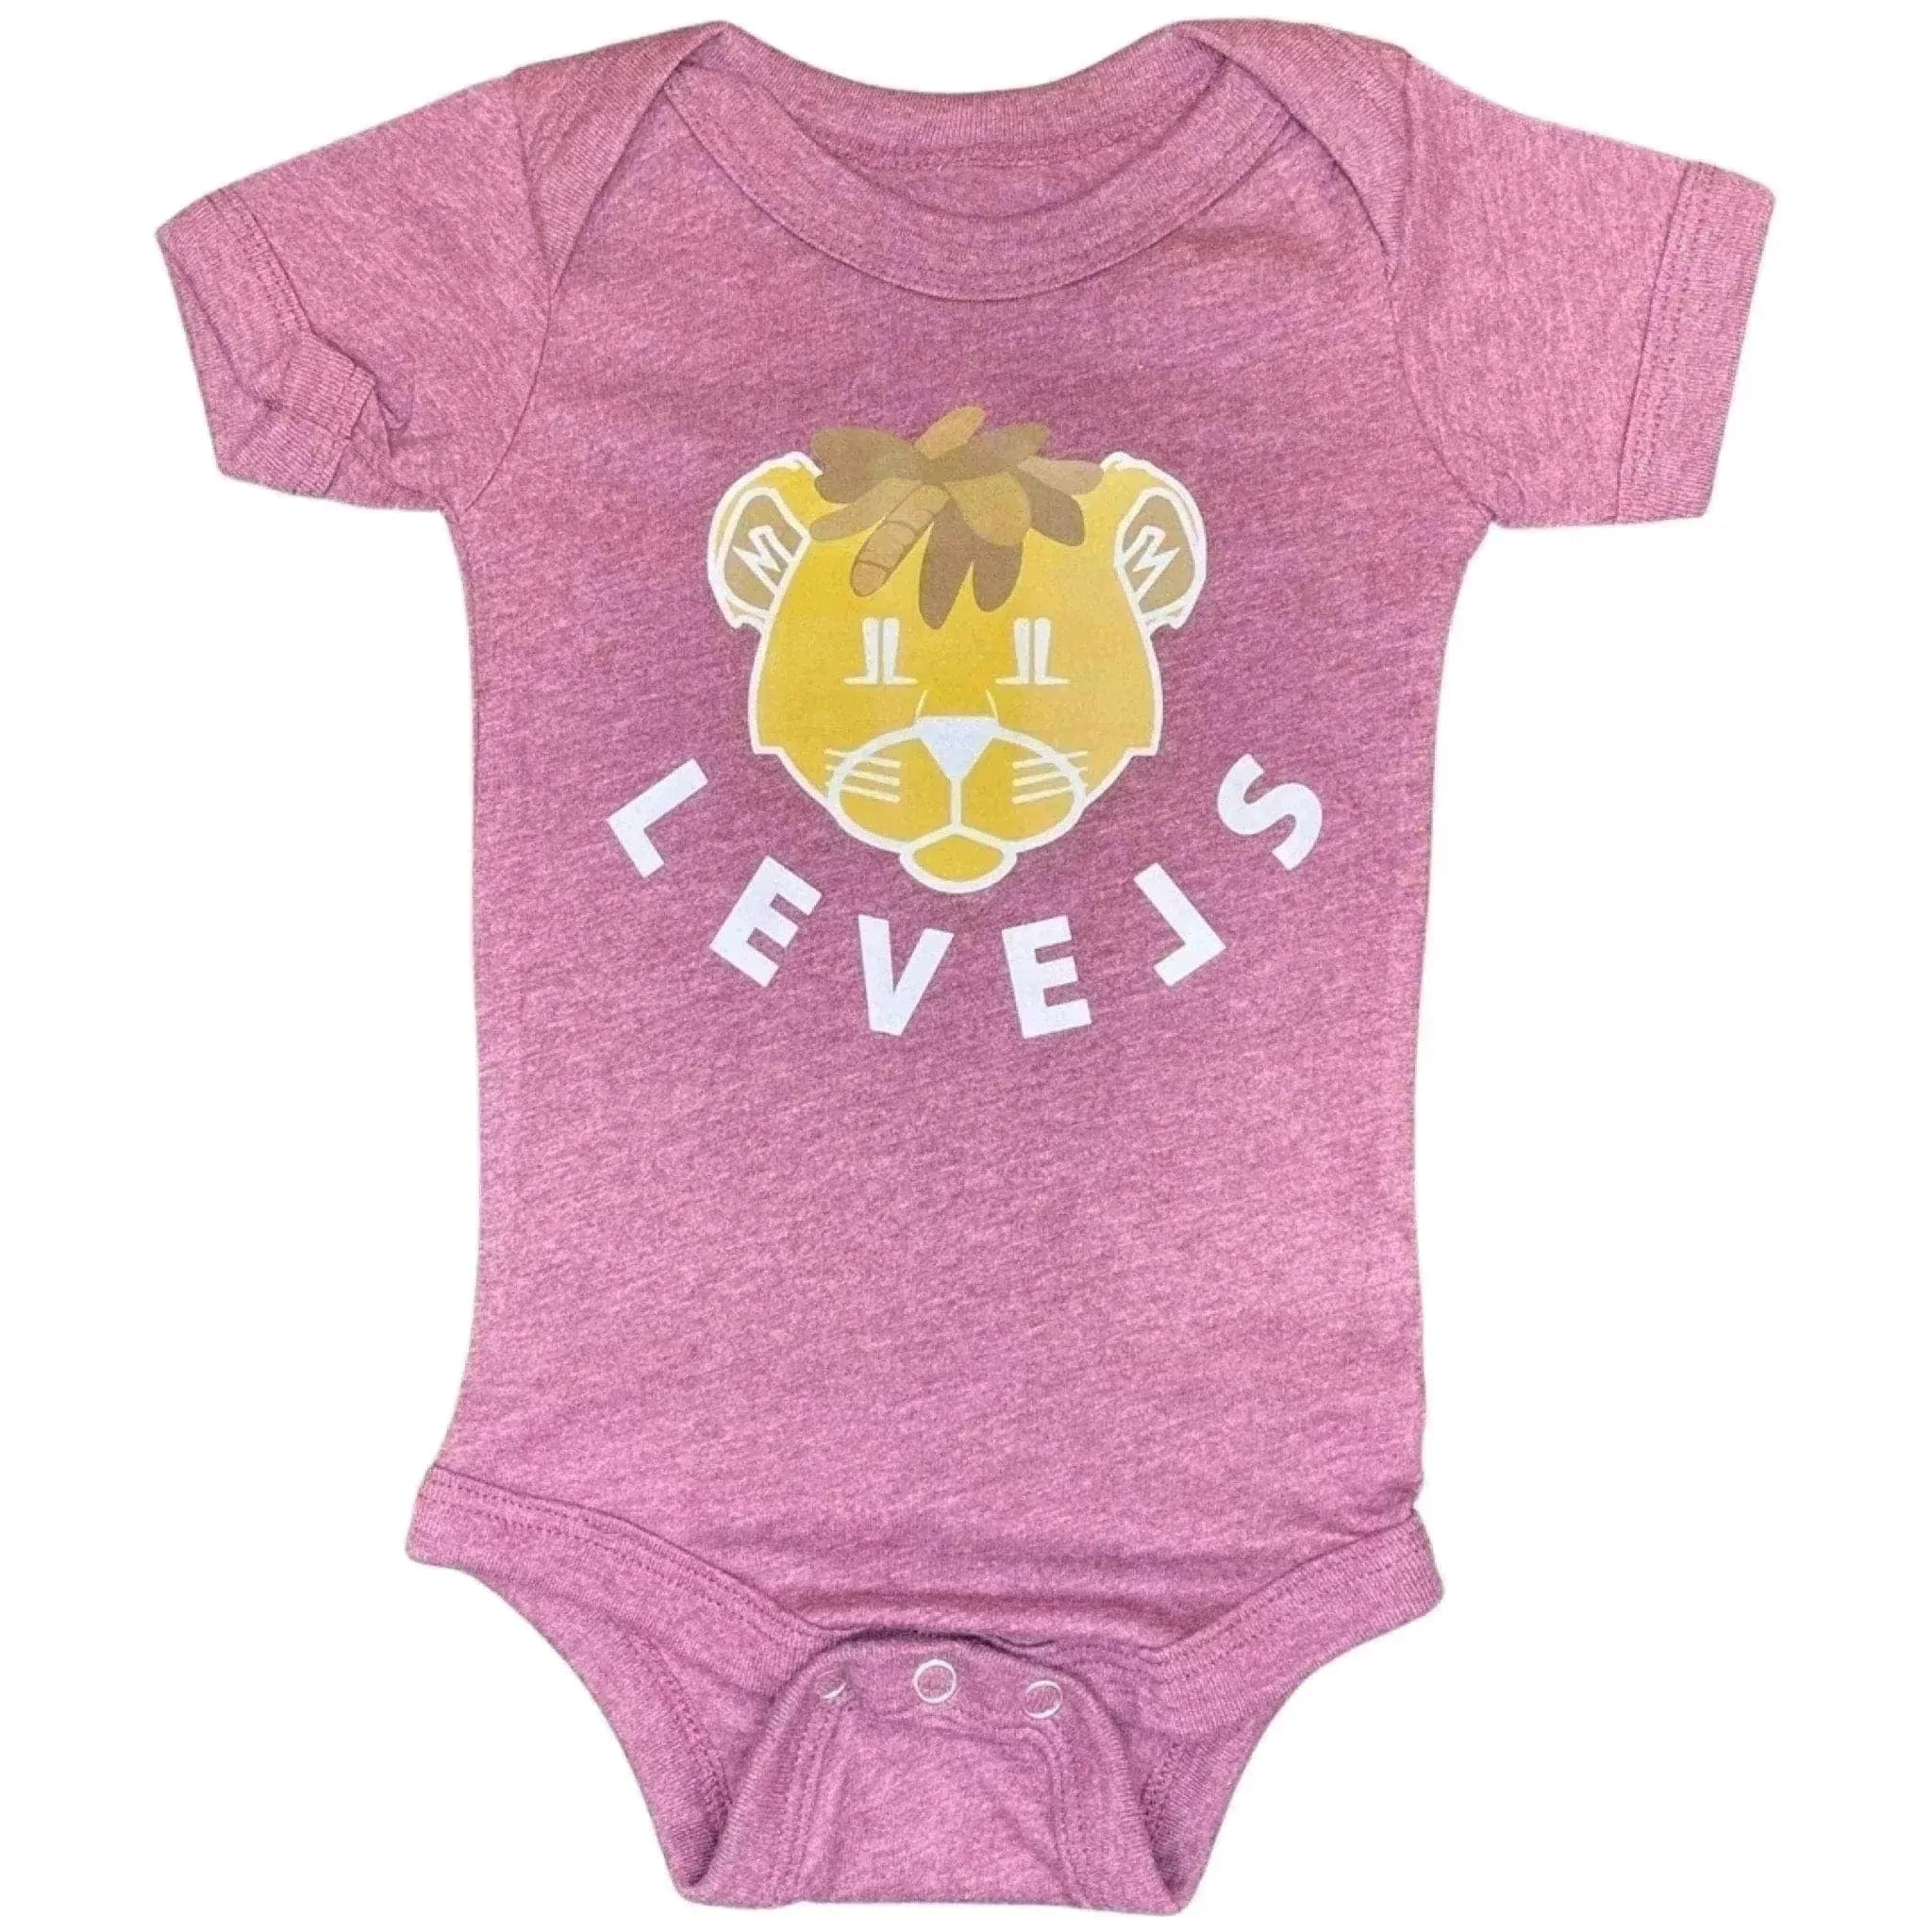 LEVELS, LLC Baby & Toddler Little Face Onesie (Plum)